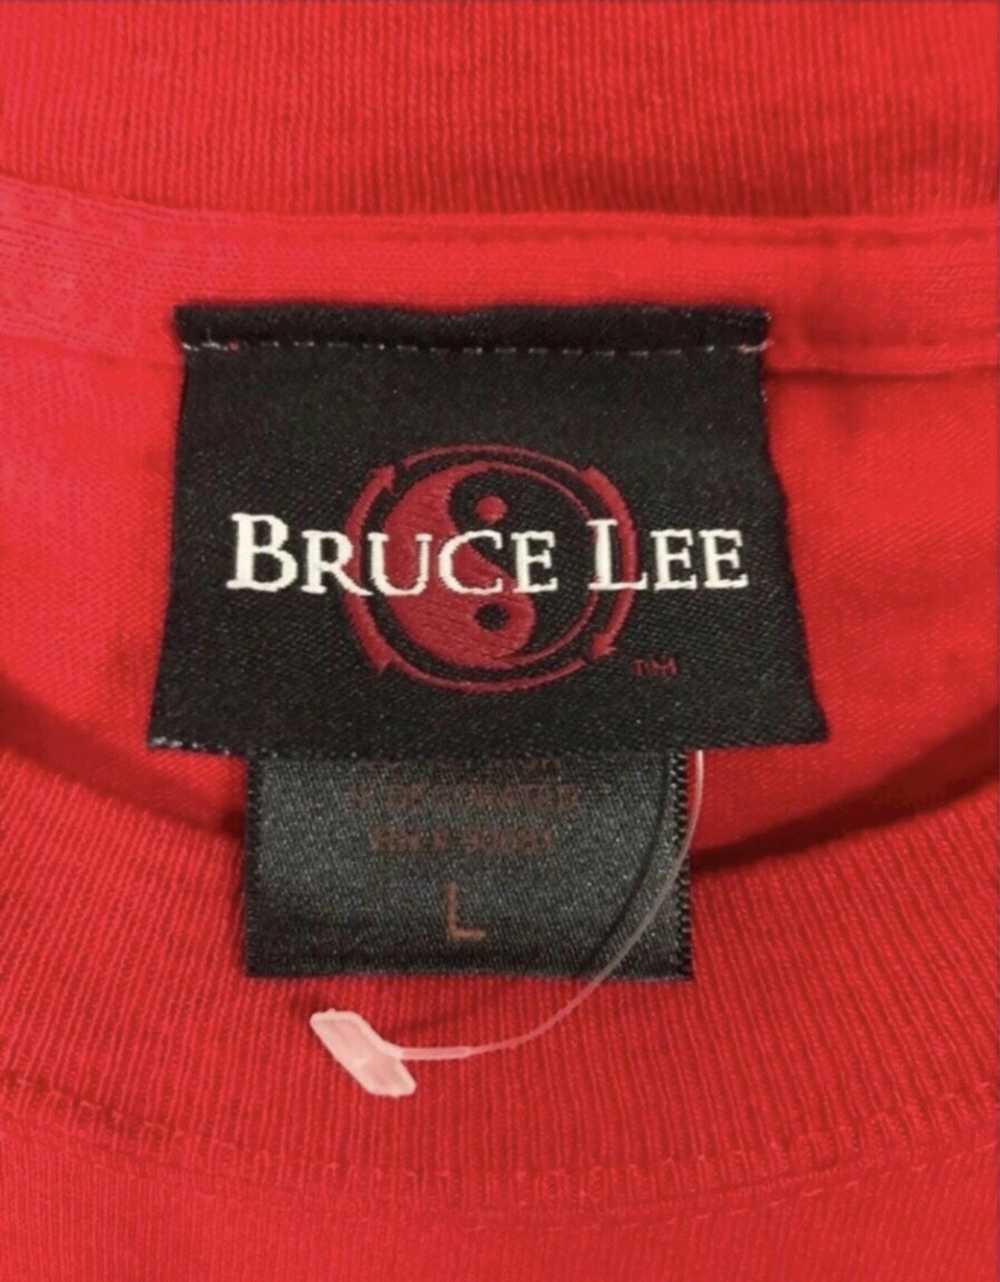 Bruce Lee × Movie × Vintage Bruce Lee shirt - image 3